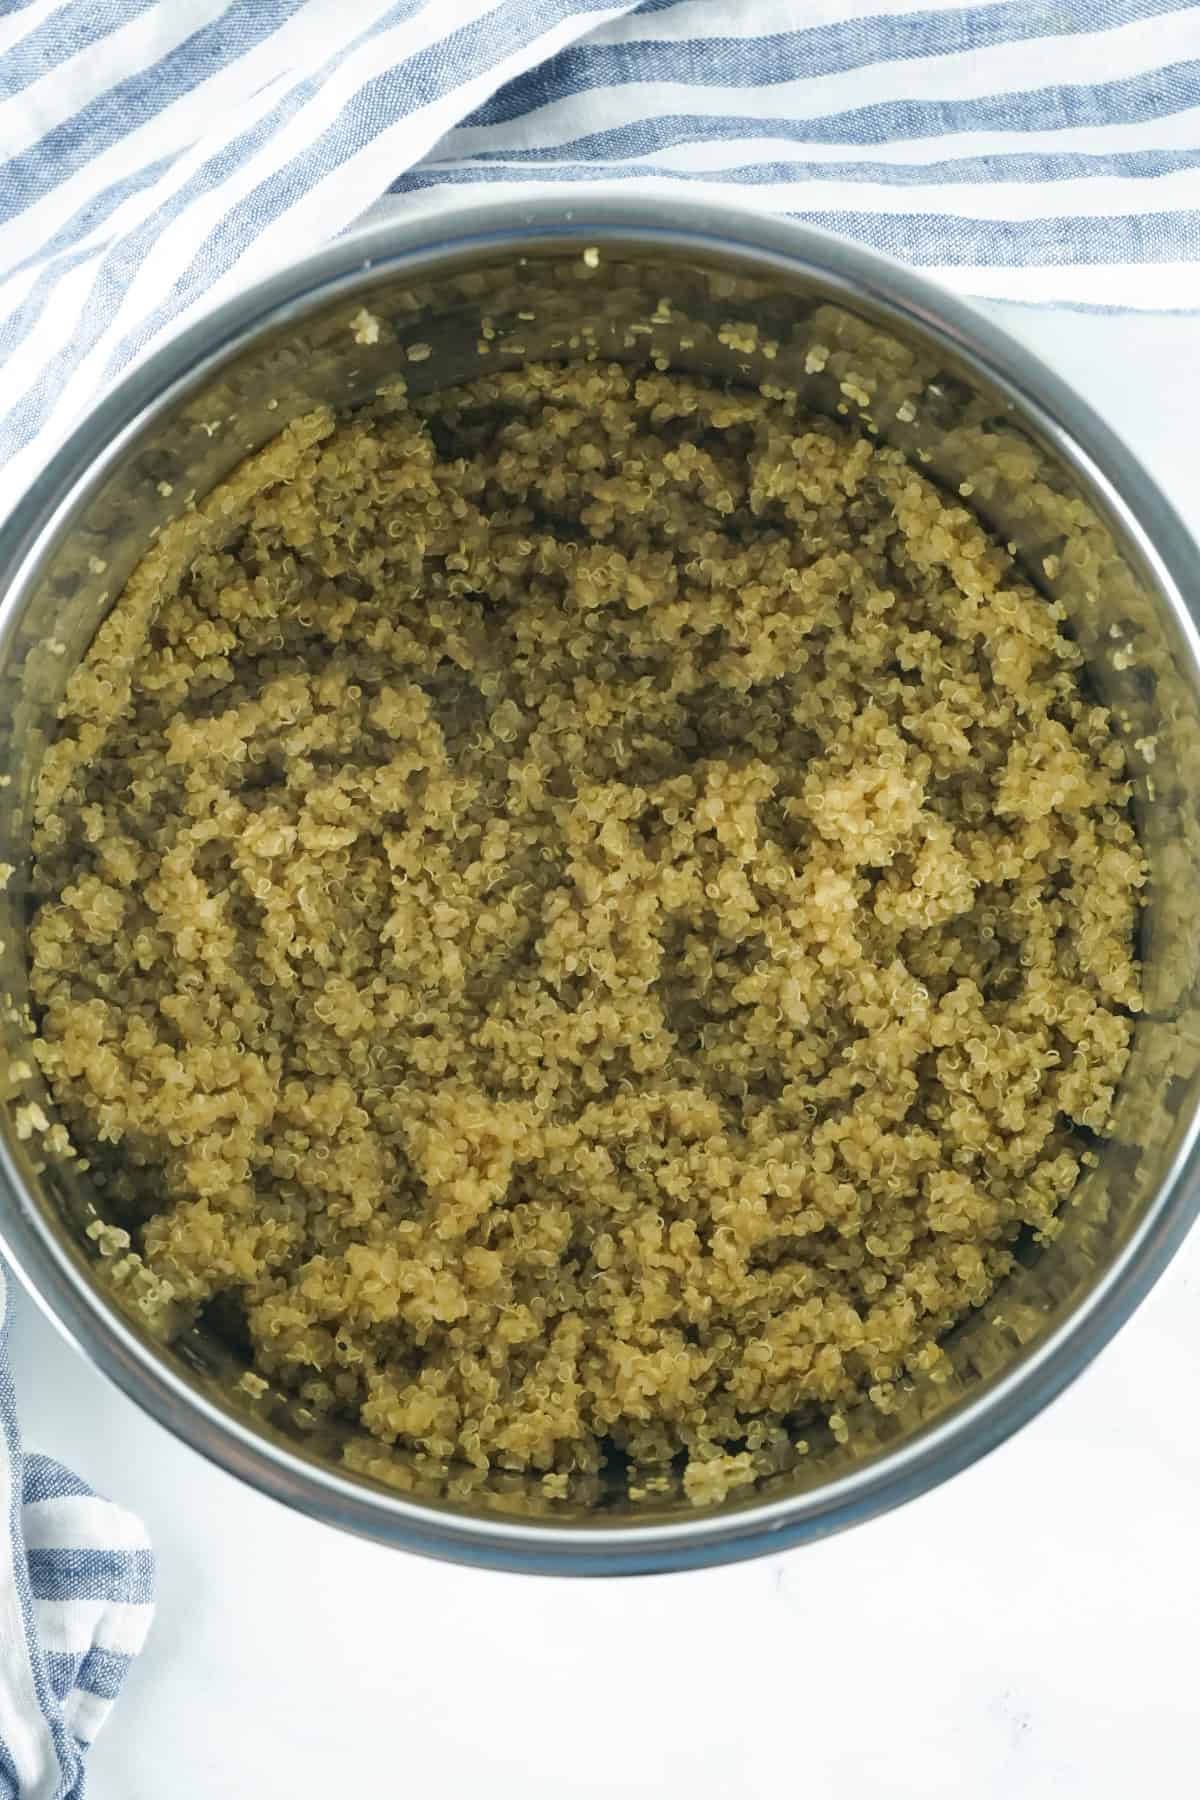 cooked quinoa in an instant pot liner pot.